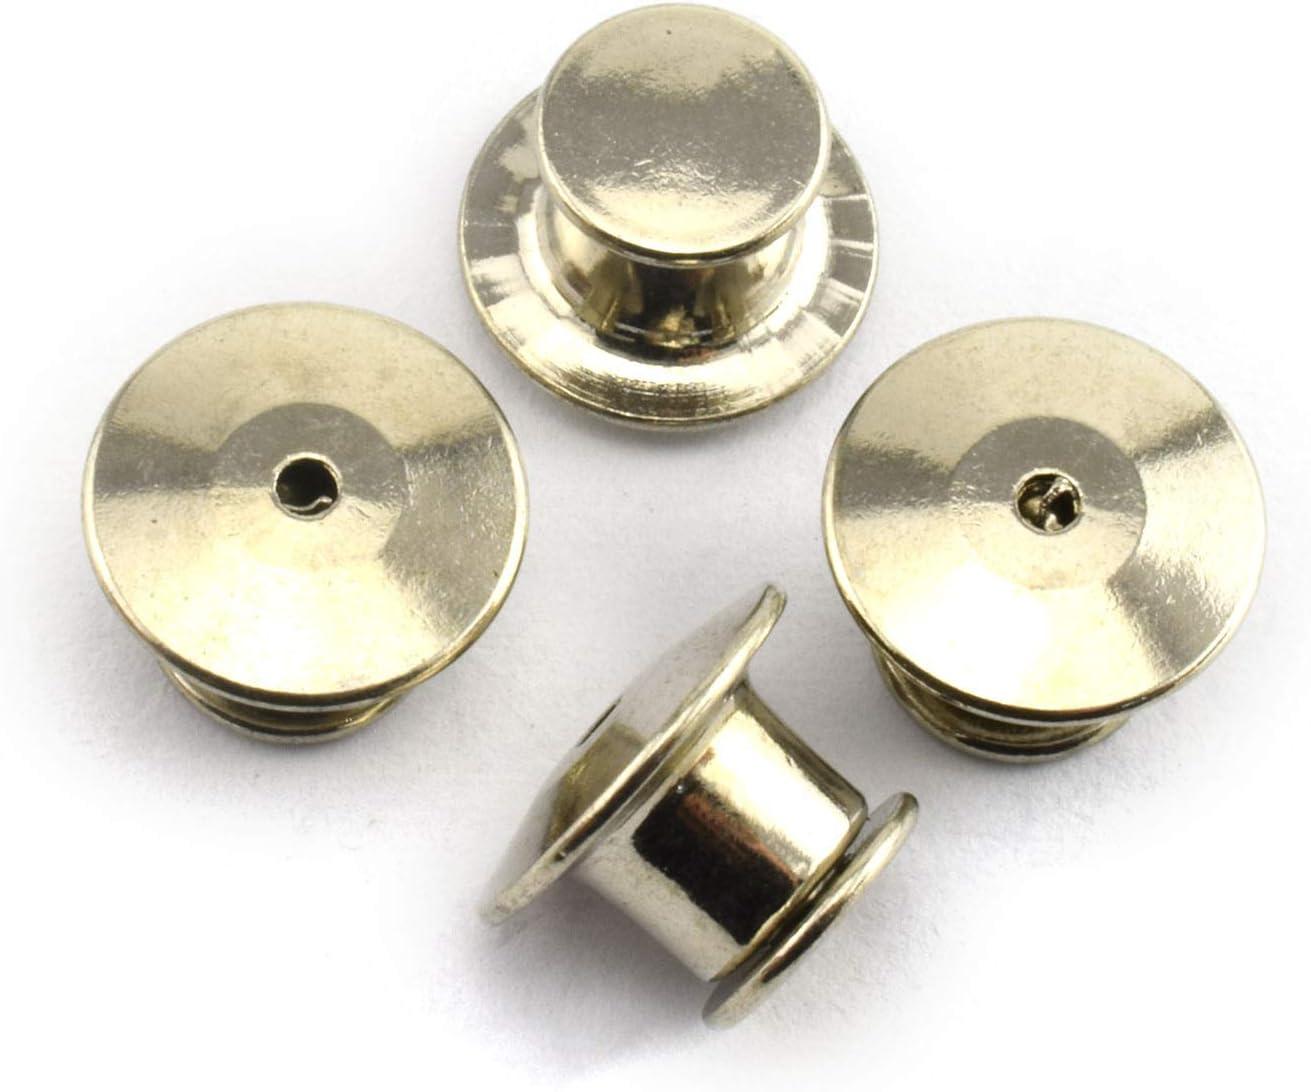 Disney Parks Brass Locking Pin Backs lot of 20 pieces with Locking Key Tool